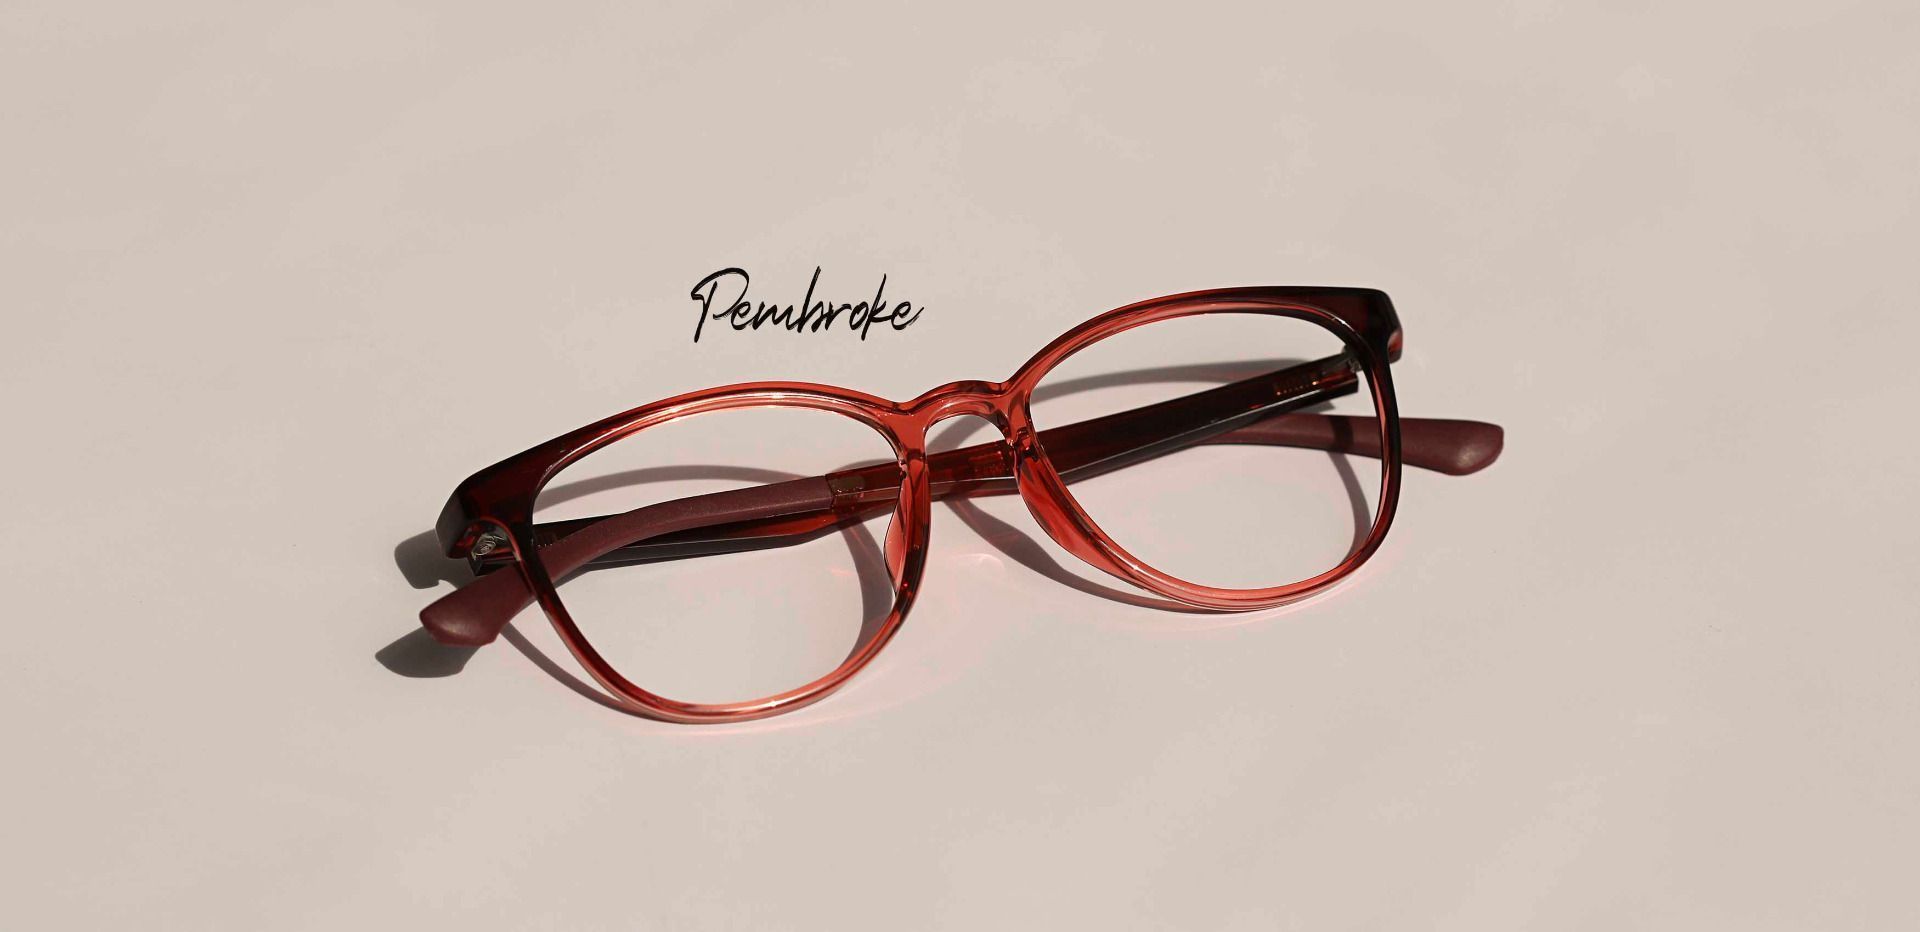 Pembroke Oval Non-Rx Glasses - Pink